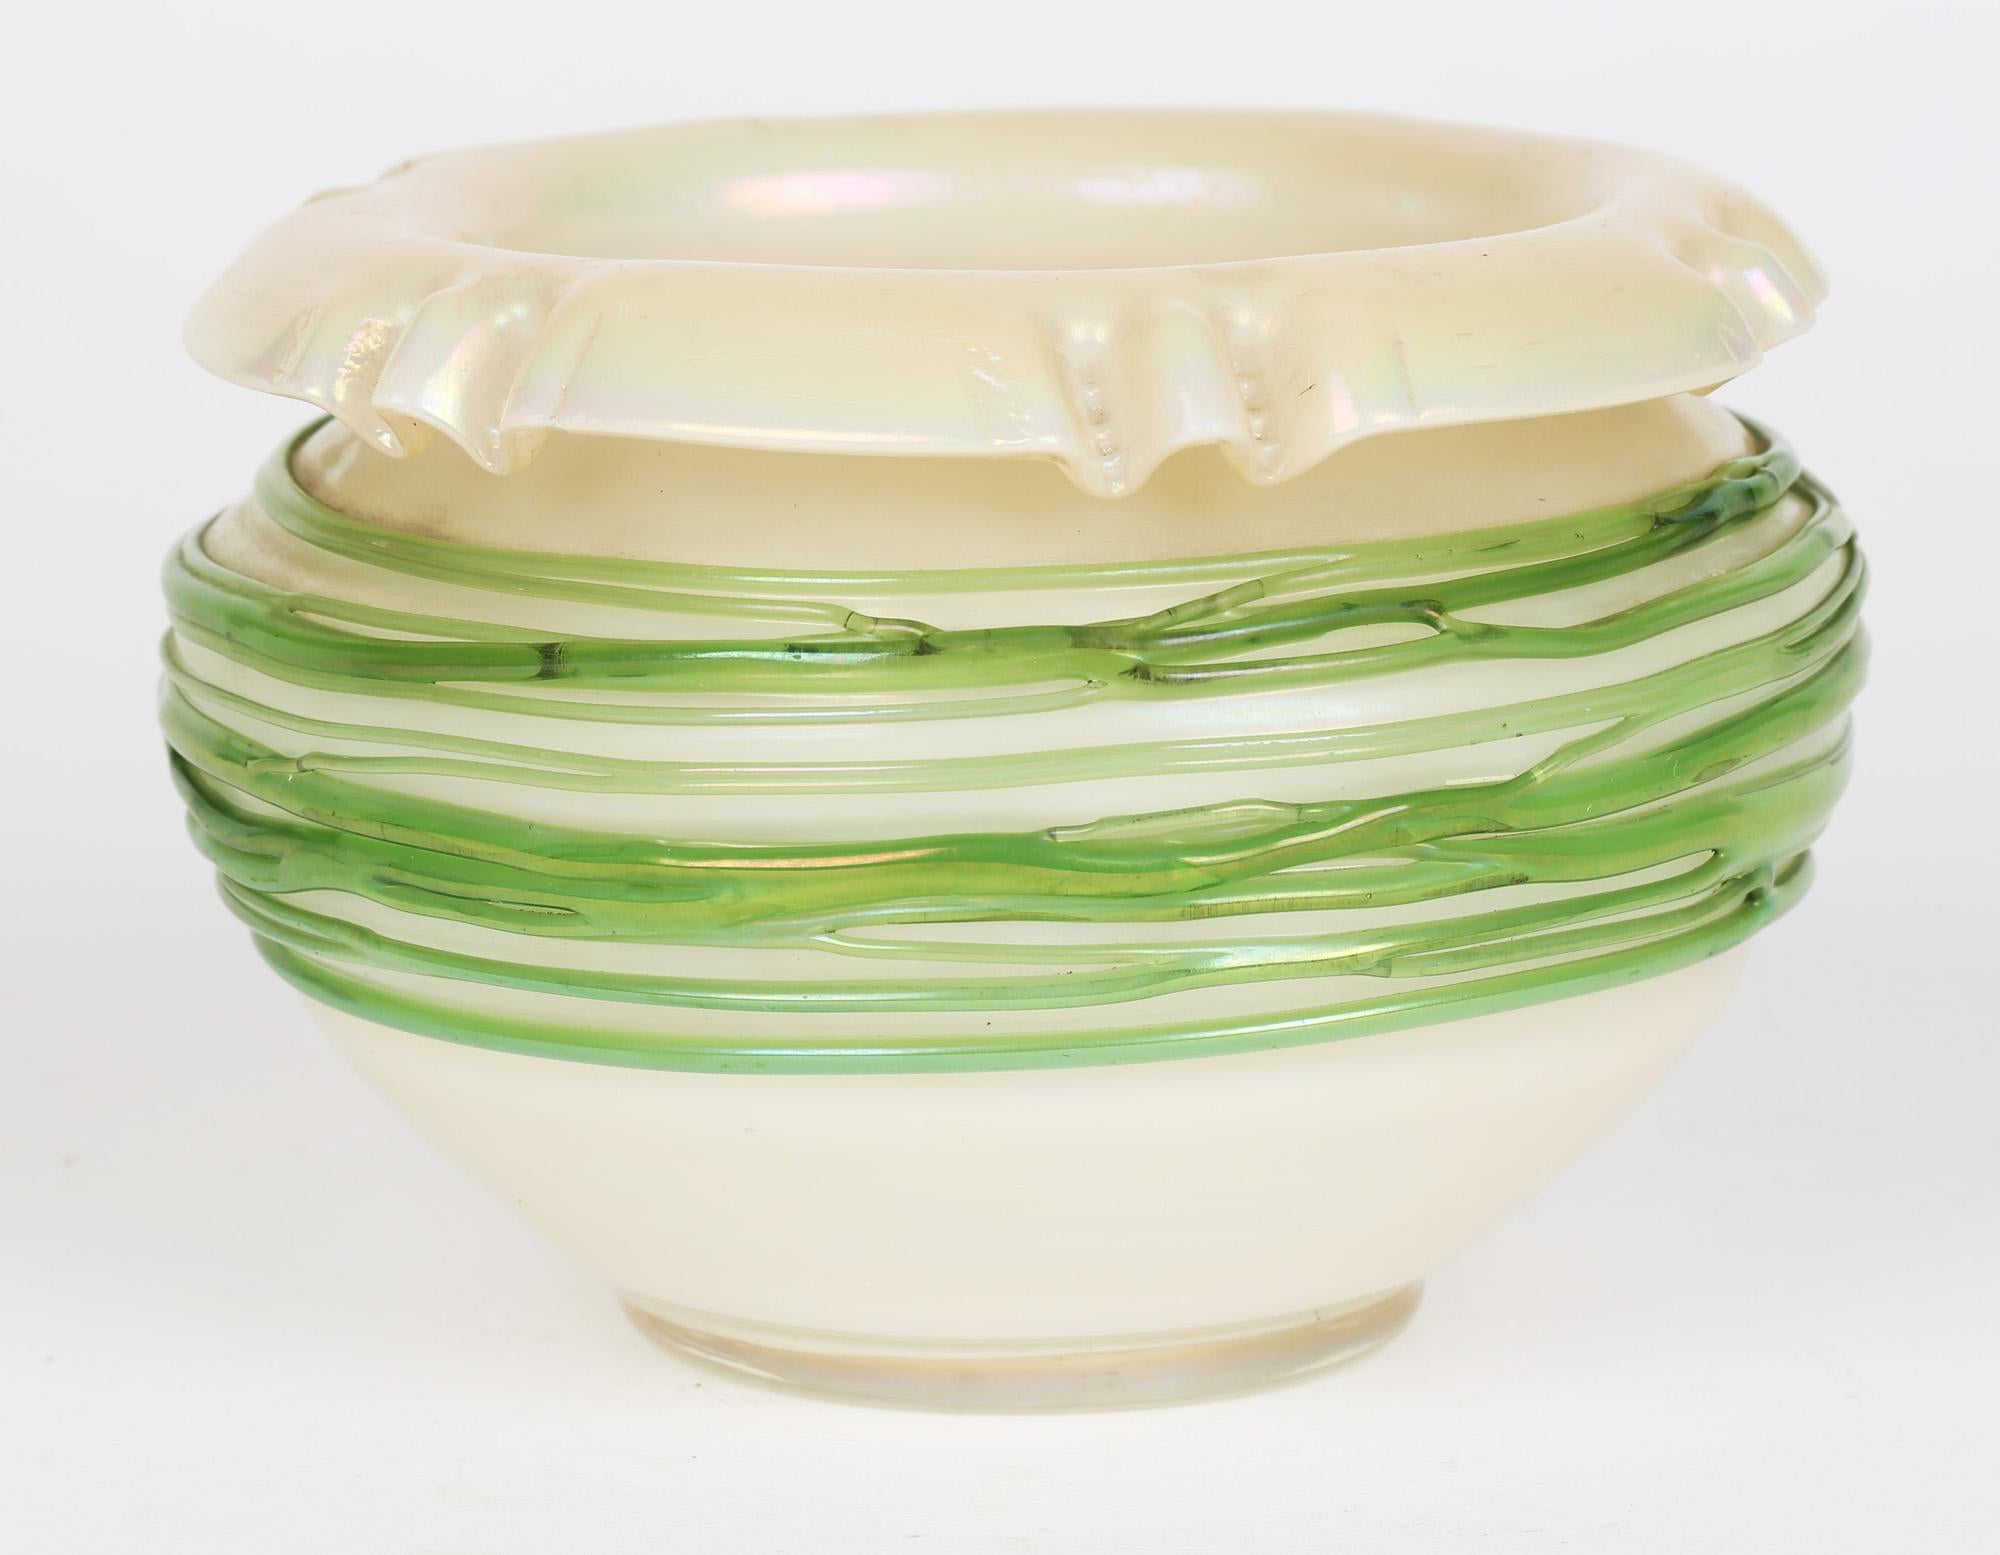 Palme König Green Trailed Thread Iridescent Art Glass Vase For Sale 4